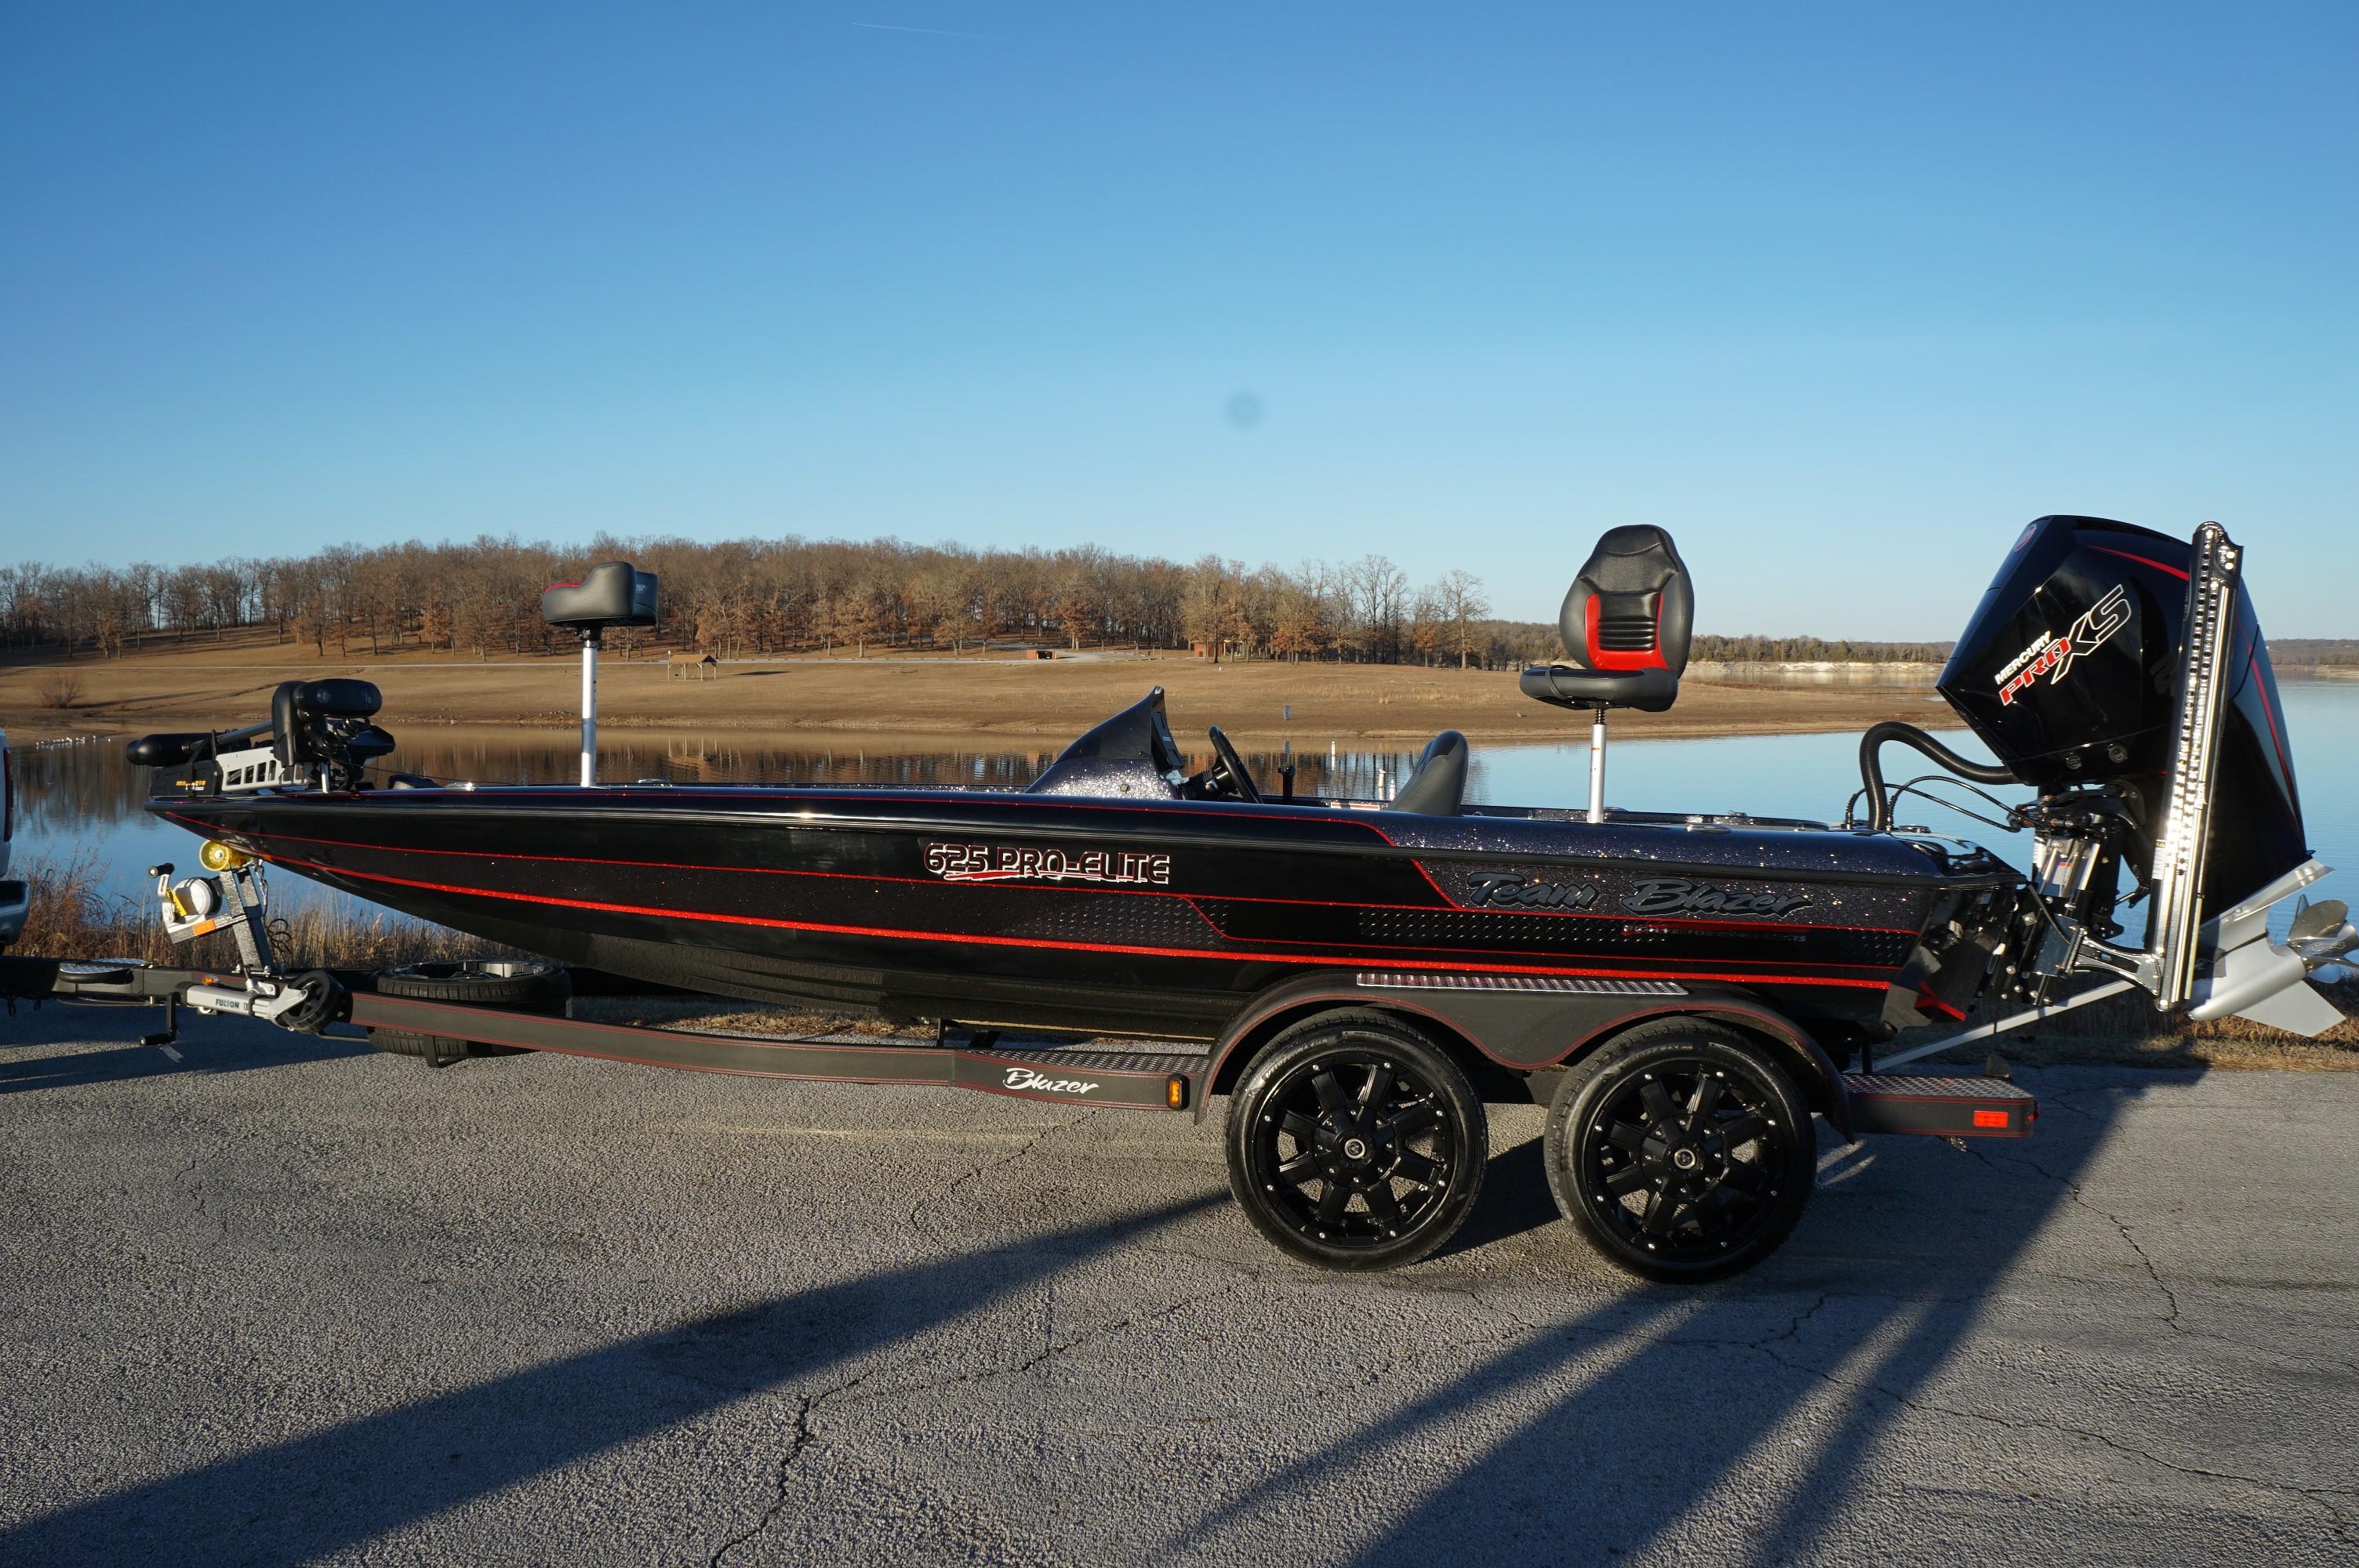 2019 Blazer 625 Pro Elite, Warsaw Missouri - boats.com